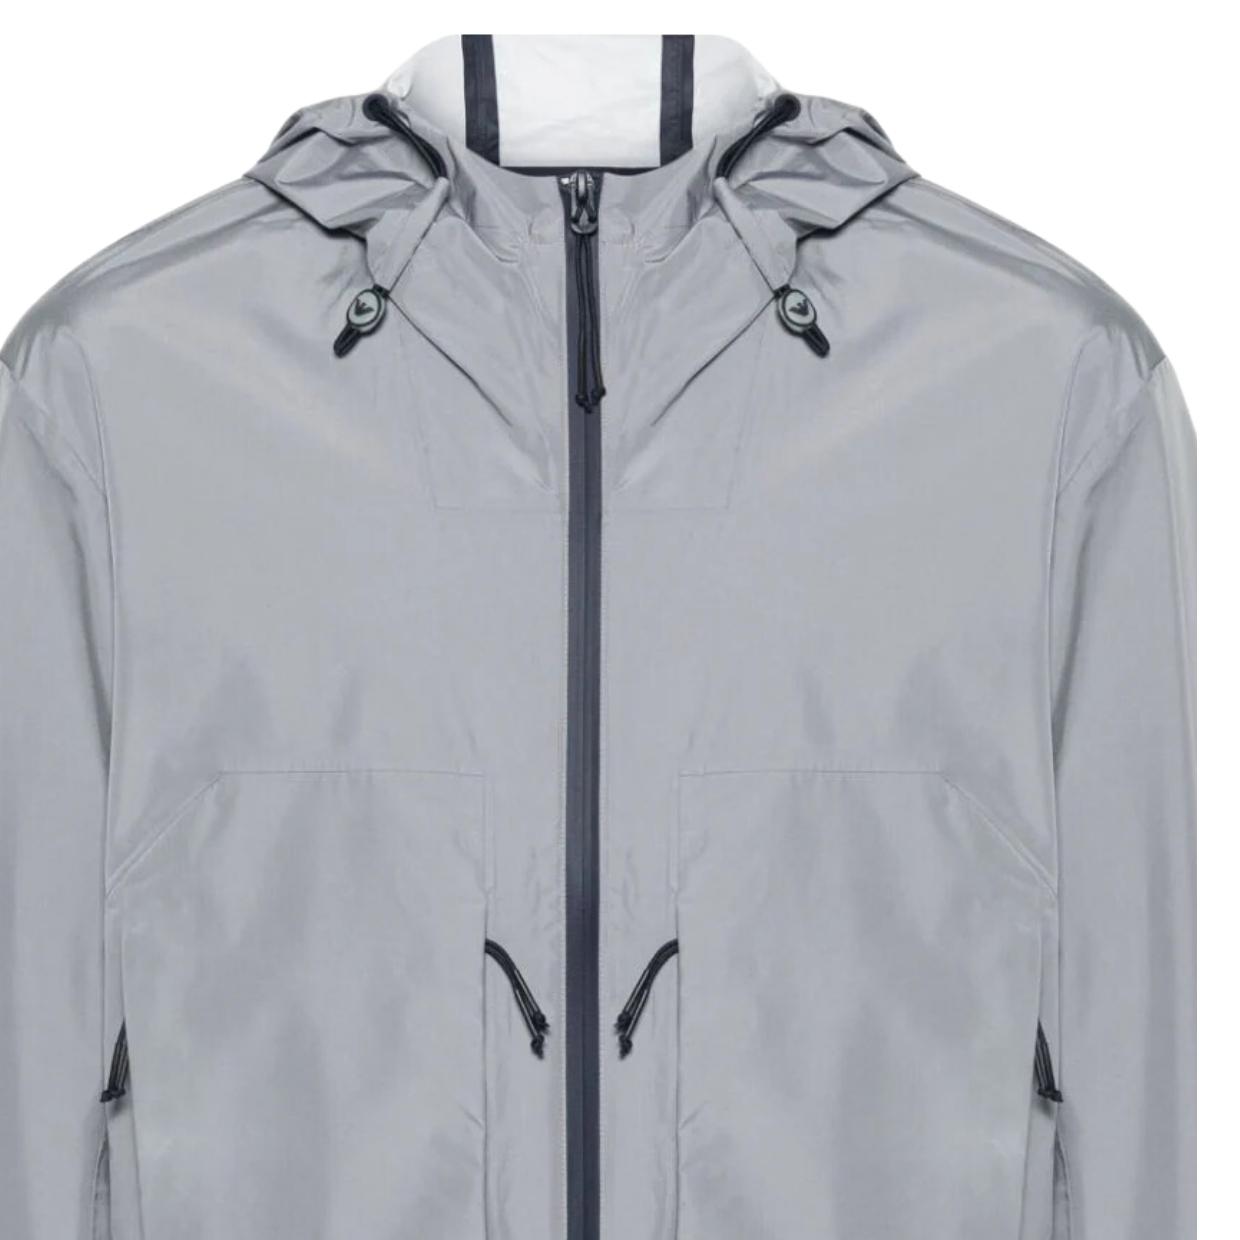 Emporio Armani Grey Lightweight Windproof Jackets